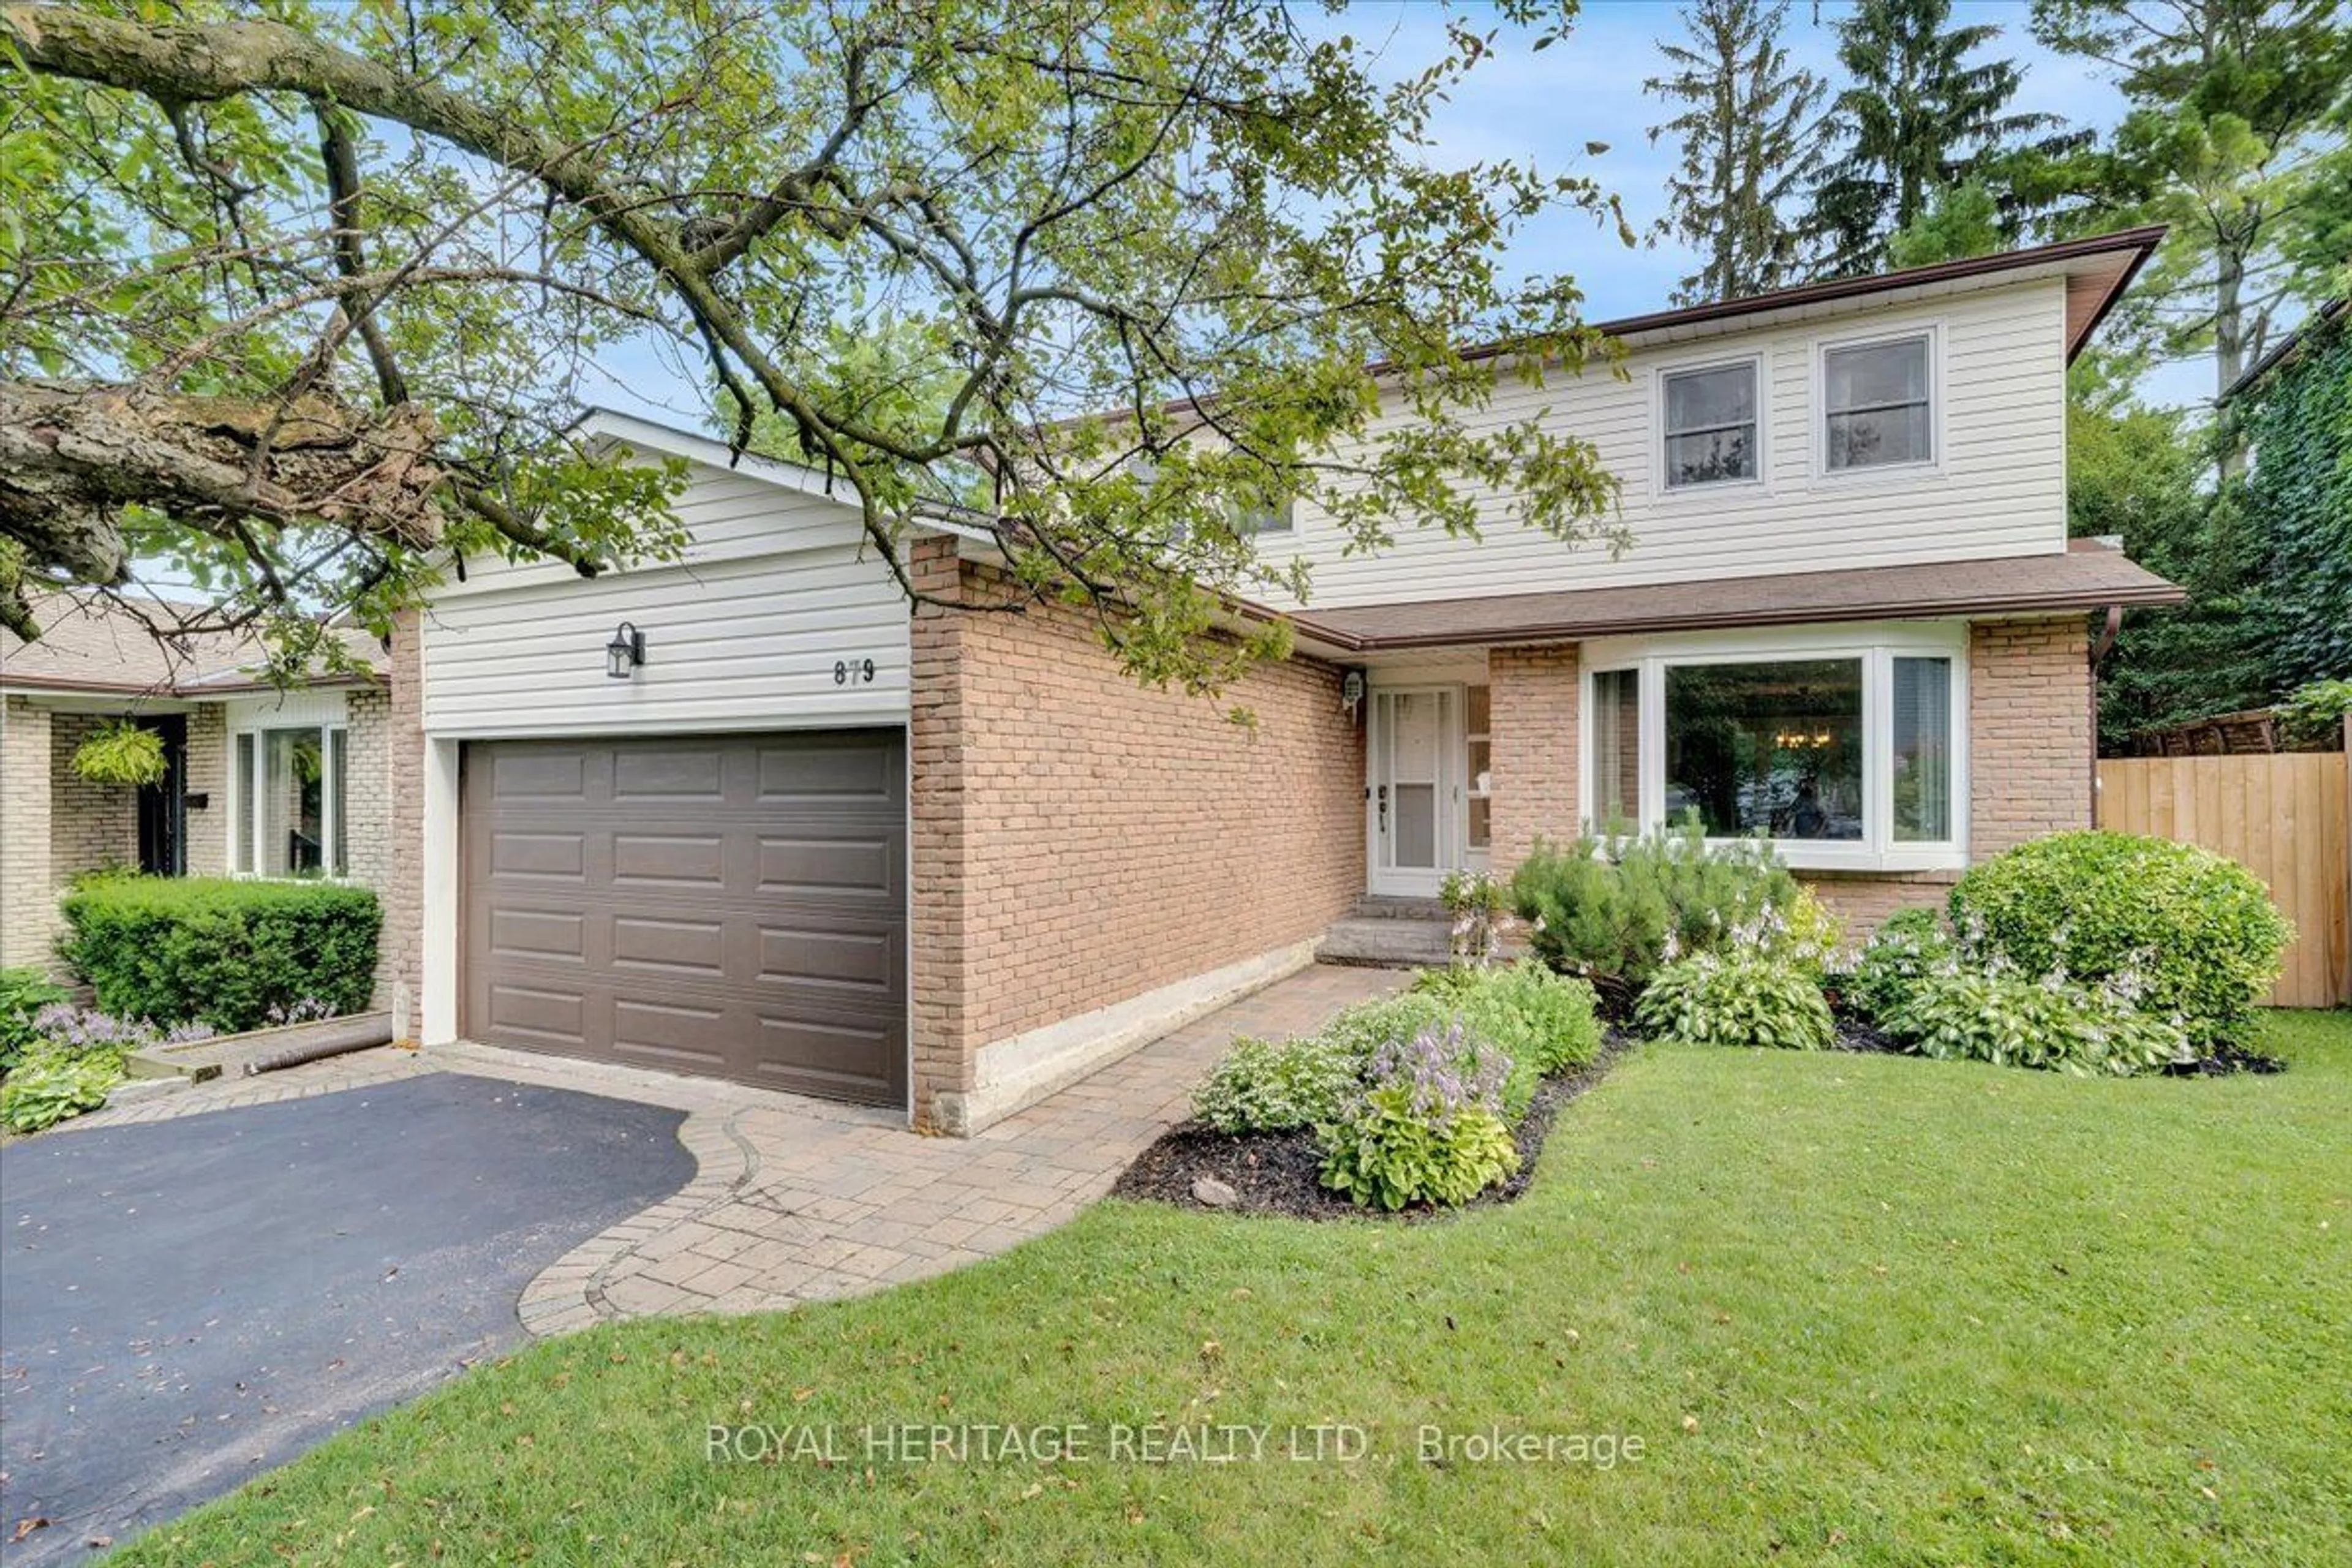 Home with brick exterior material for 879 Sorrento Ave, Oshawa Ontario L1J 6V6